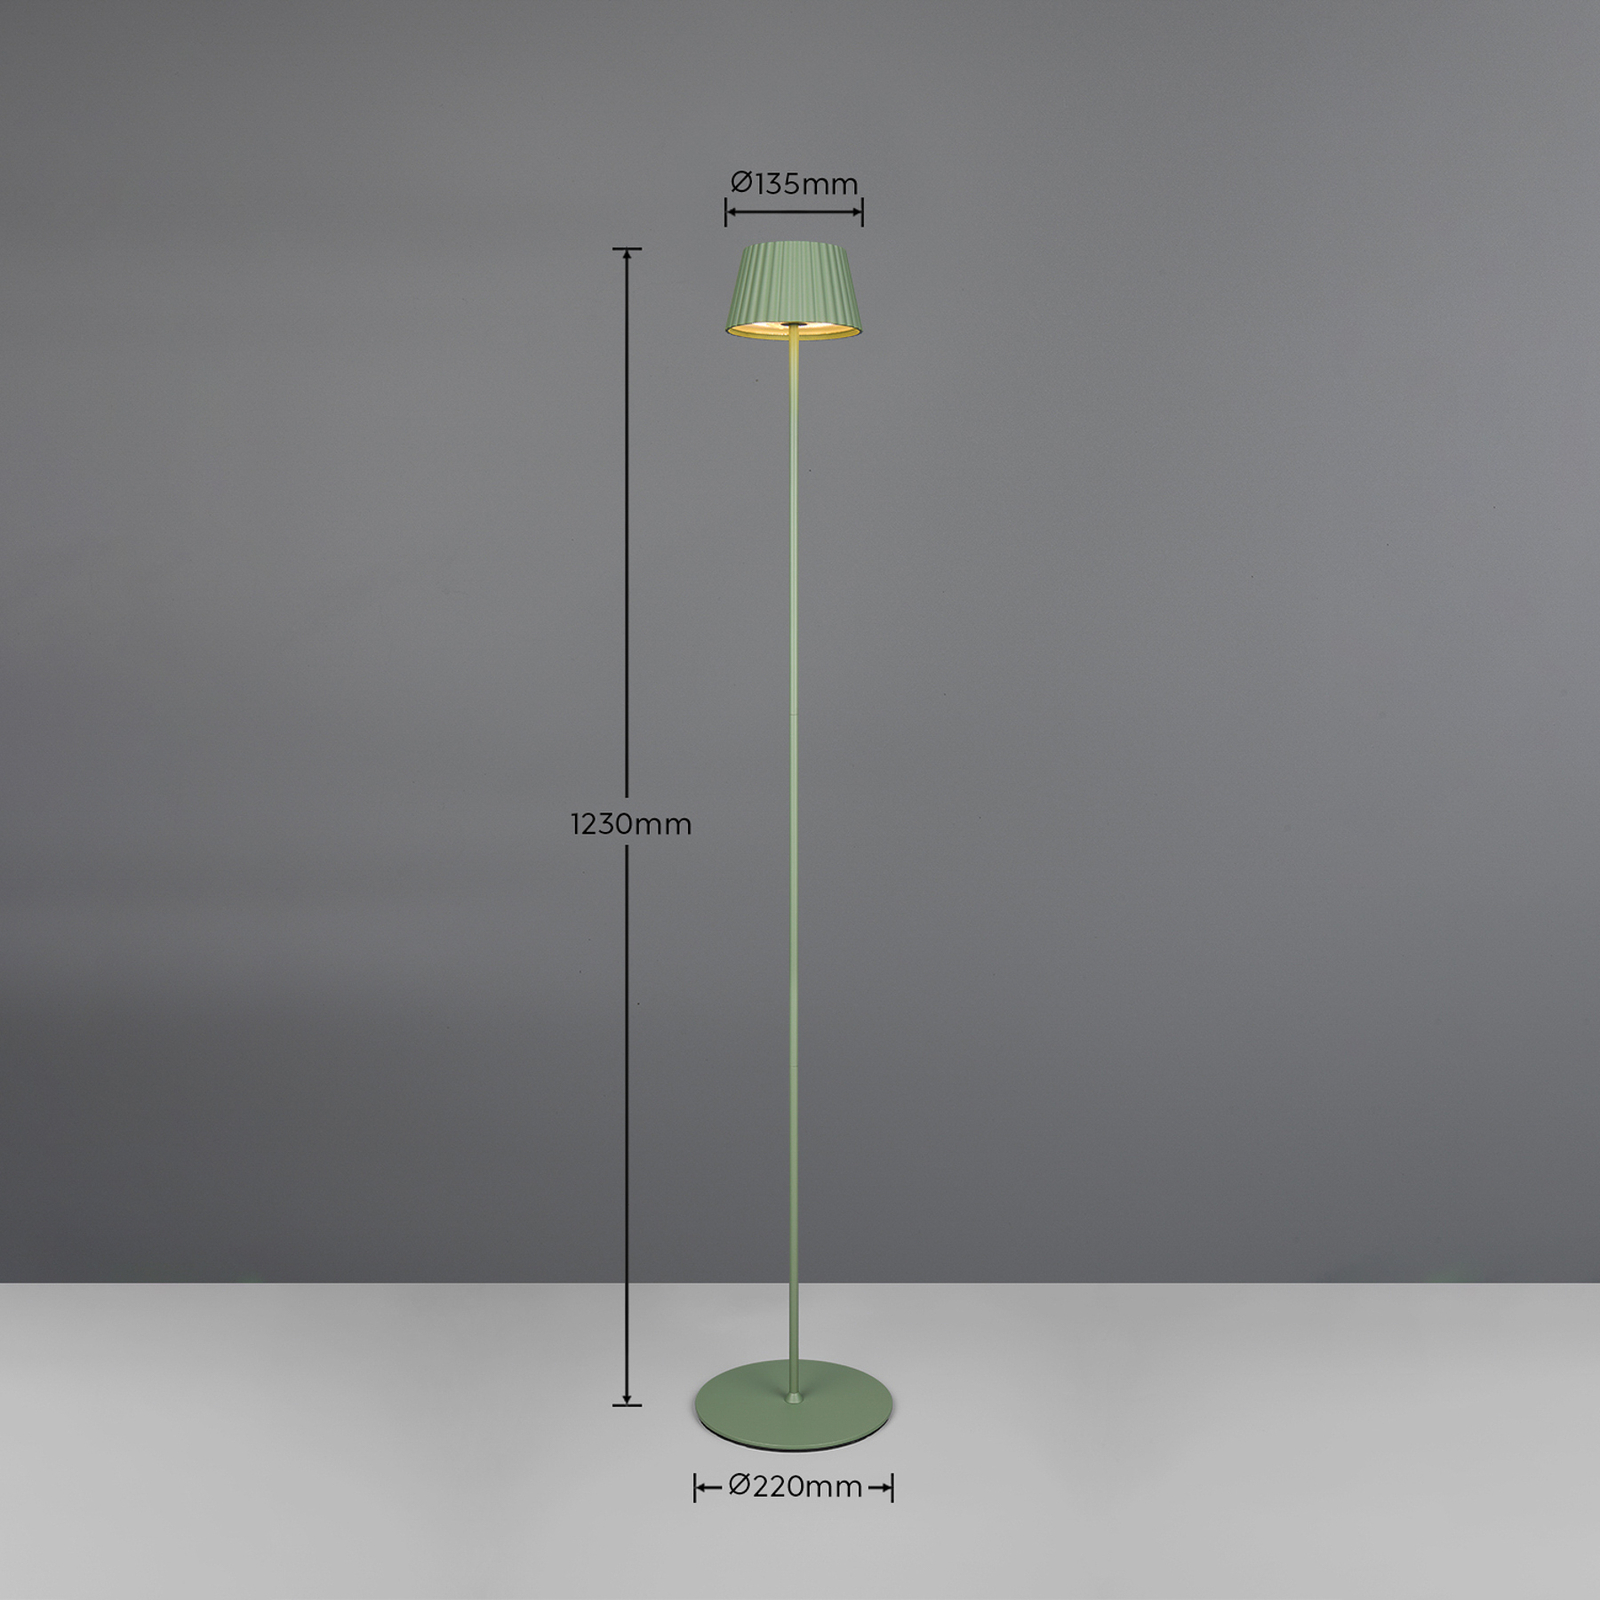 Suarez ladattava LED-lattiavalaisin, vihreä, korkeus 123 cm, metallia